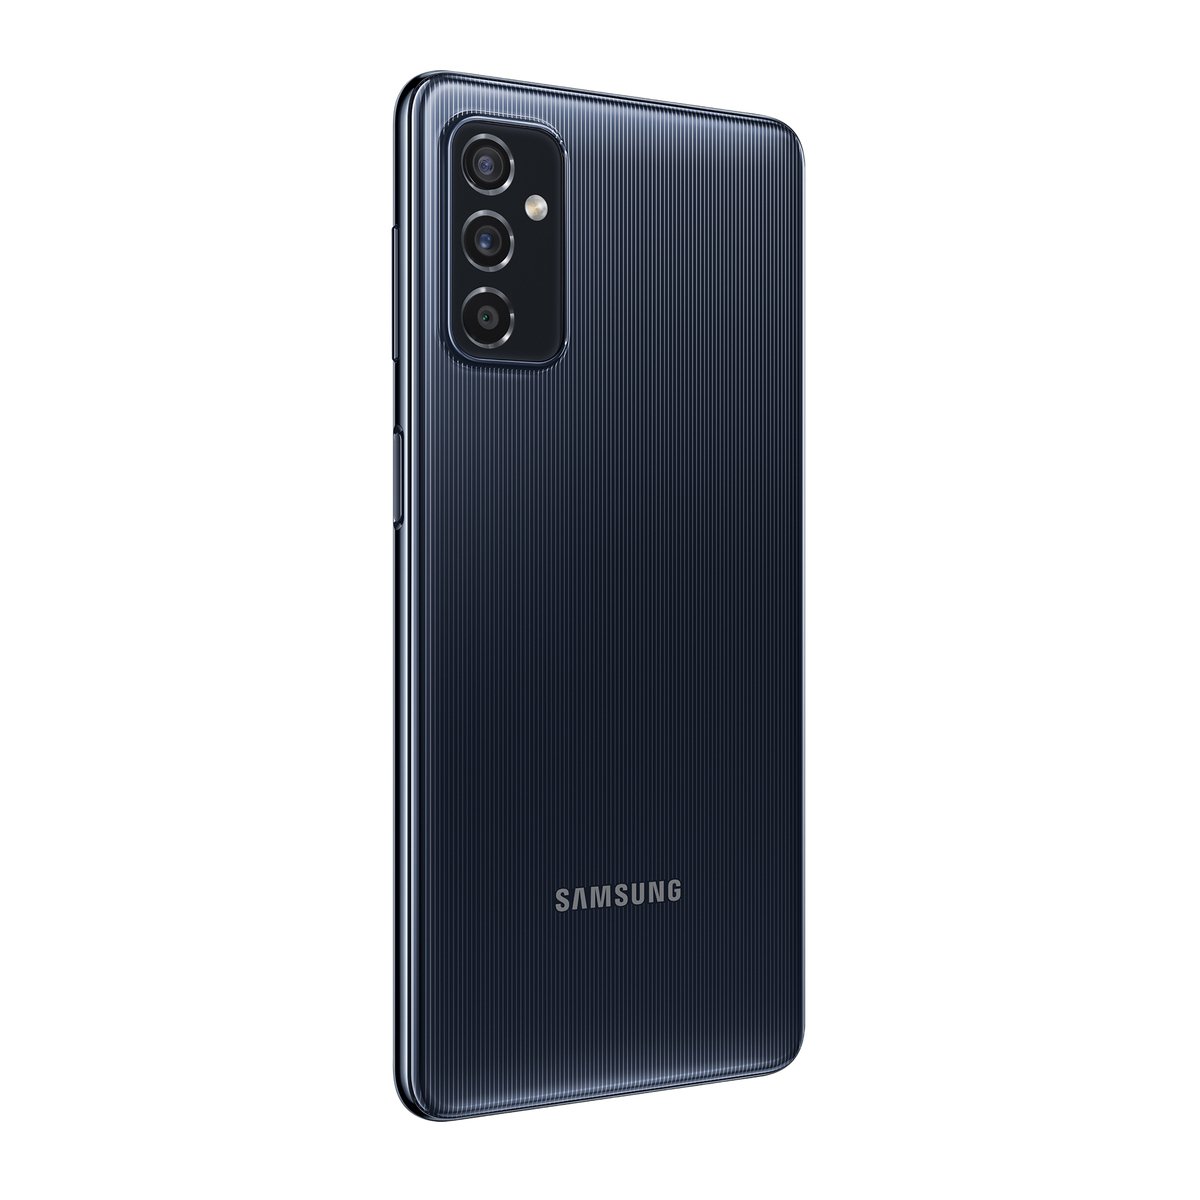 Samsung Galaxy M52,5G Dual SIM Smartphone, 128GB Storage and 8GB RAM, Black